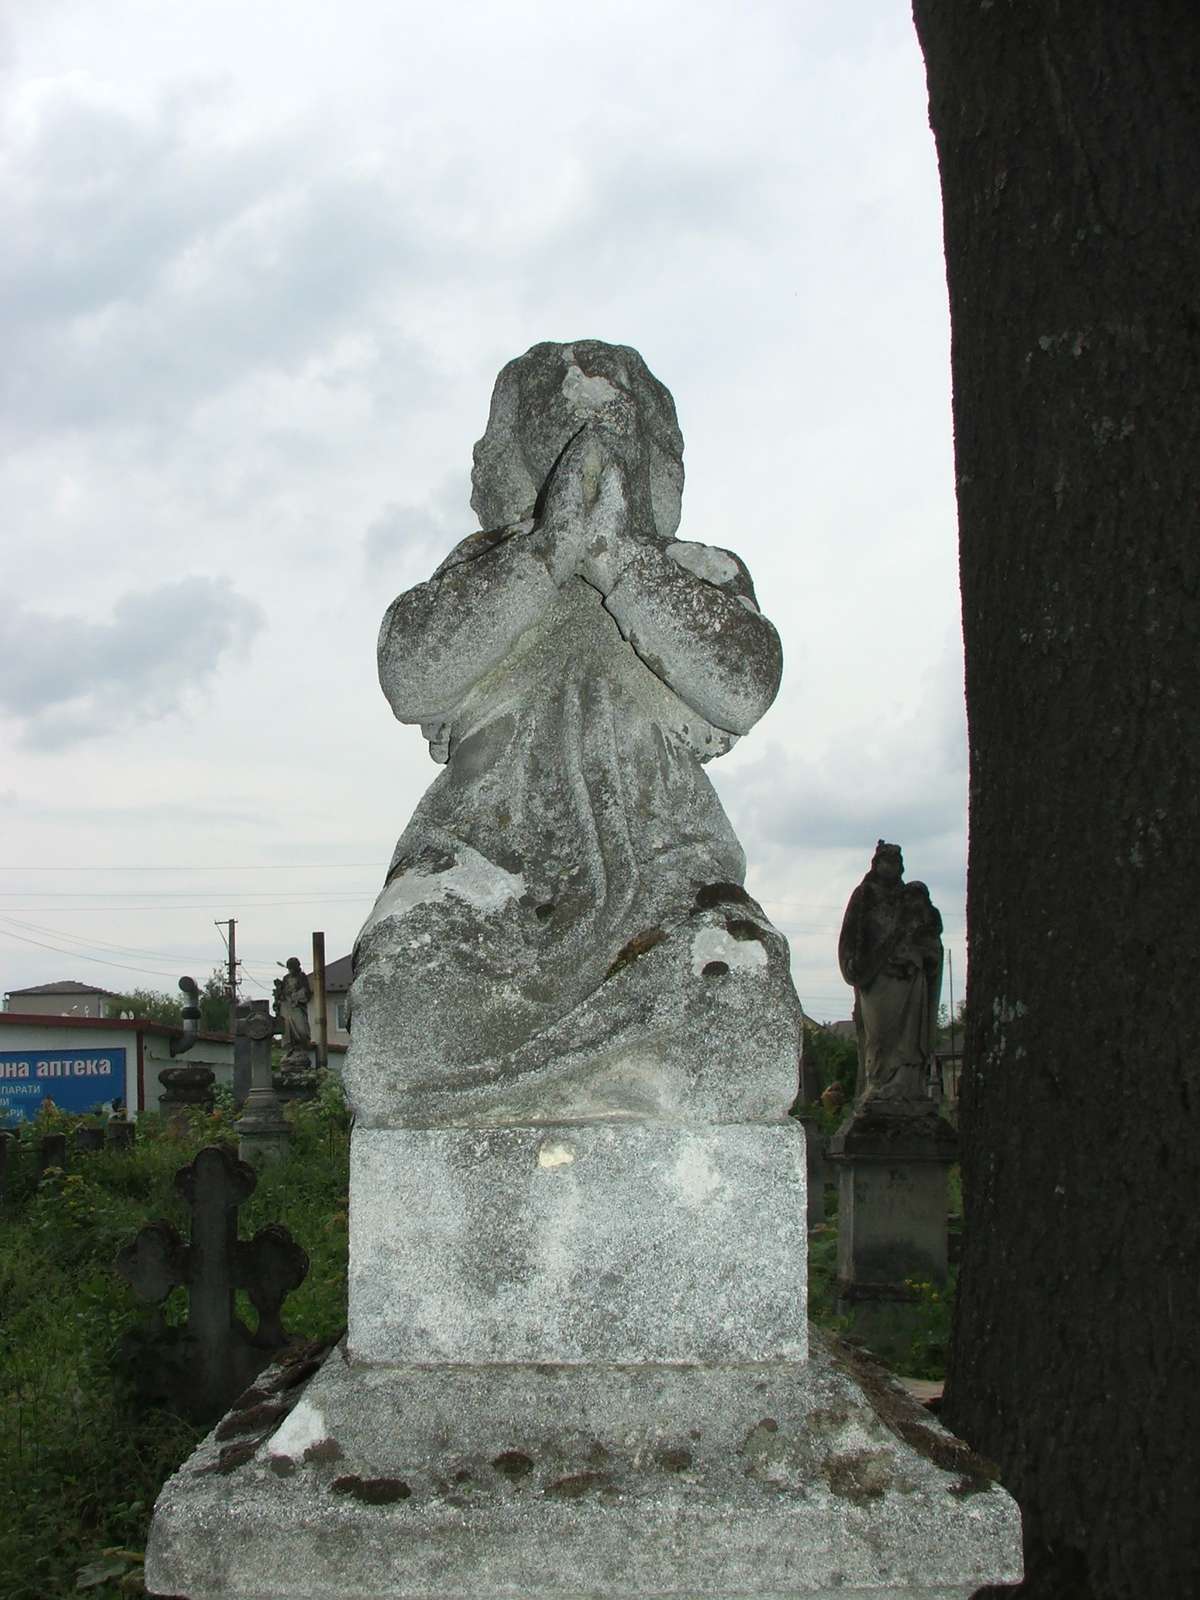 Tombstone of Adam Juzwa, Zbarazh cemetery, as of 2018